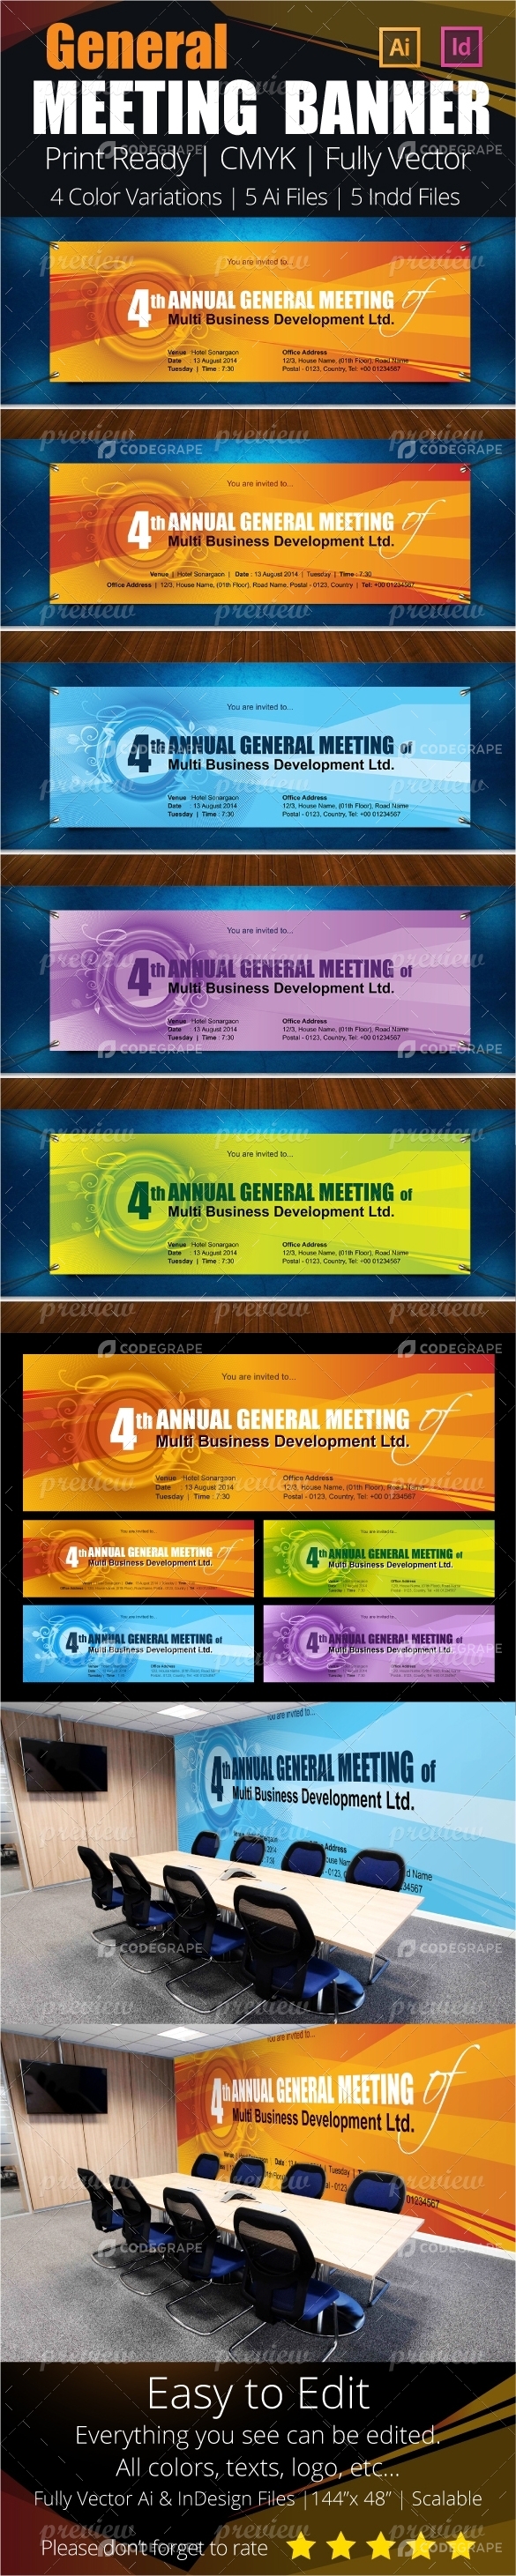 General Meeting Banner Templates